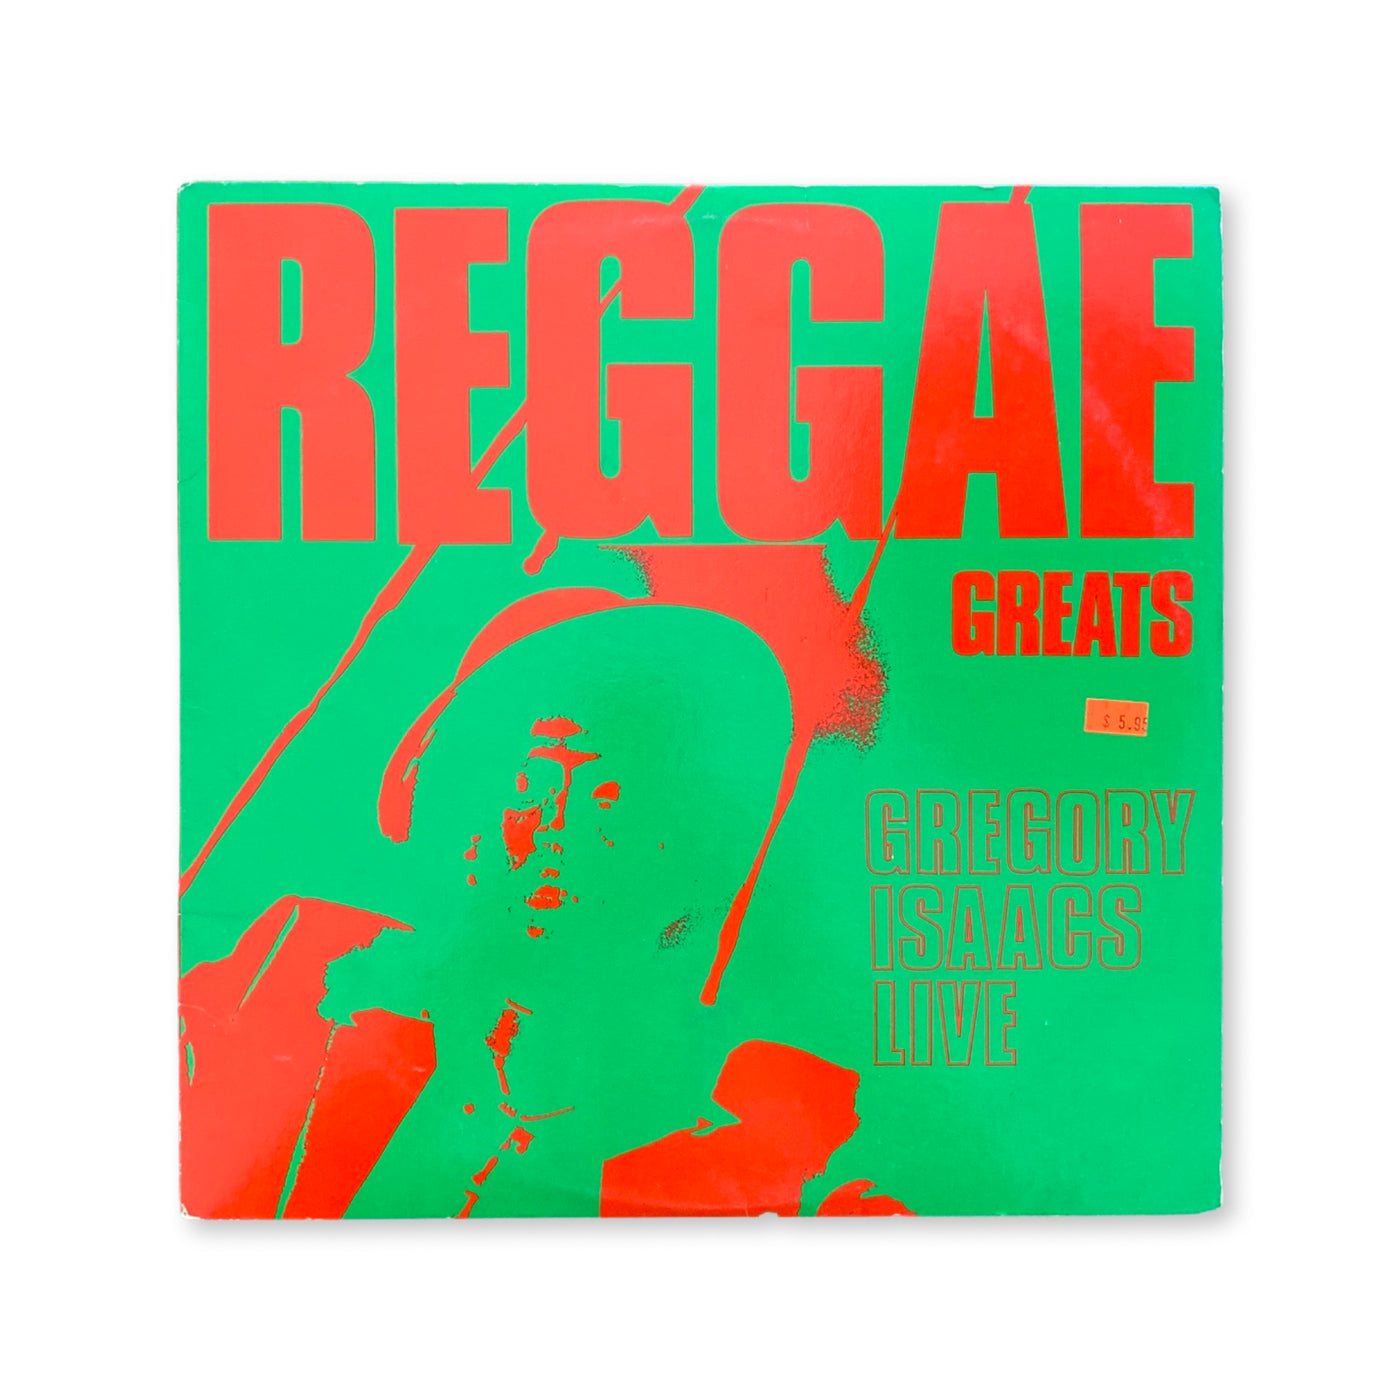 Gregory Isaacs - Reggae Greats: Gregory Isaacs Live